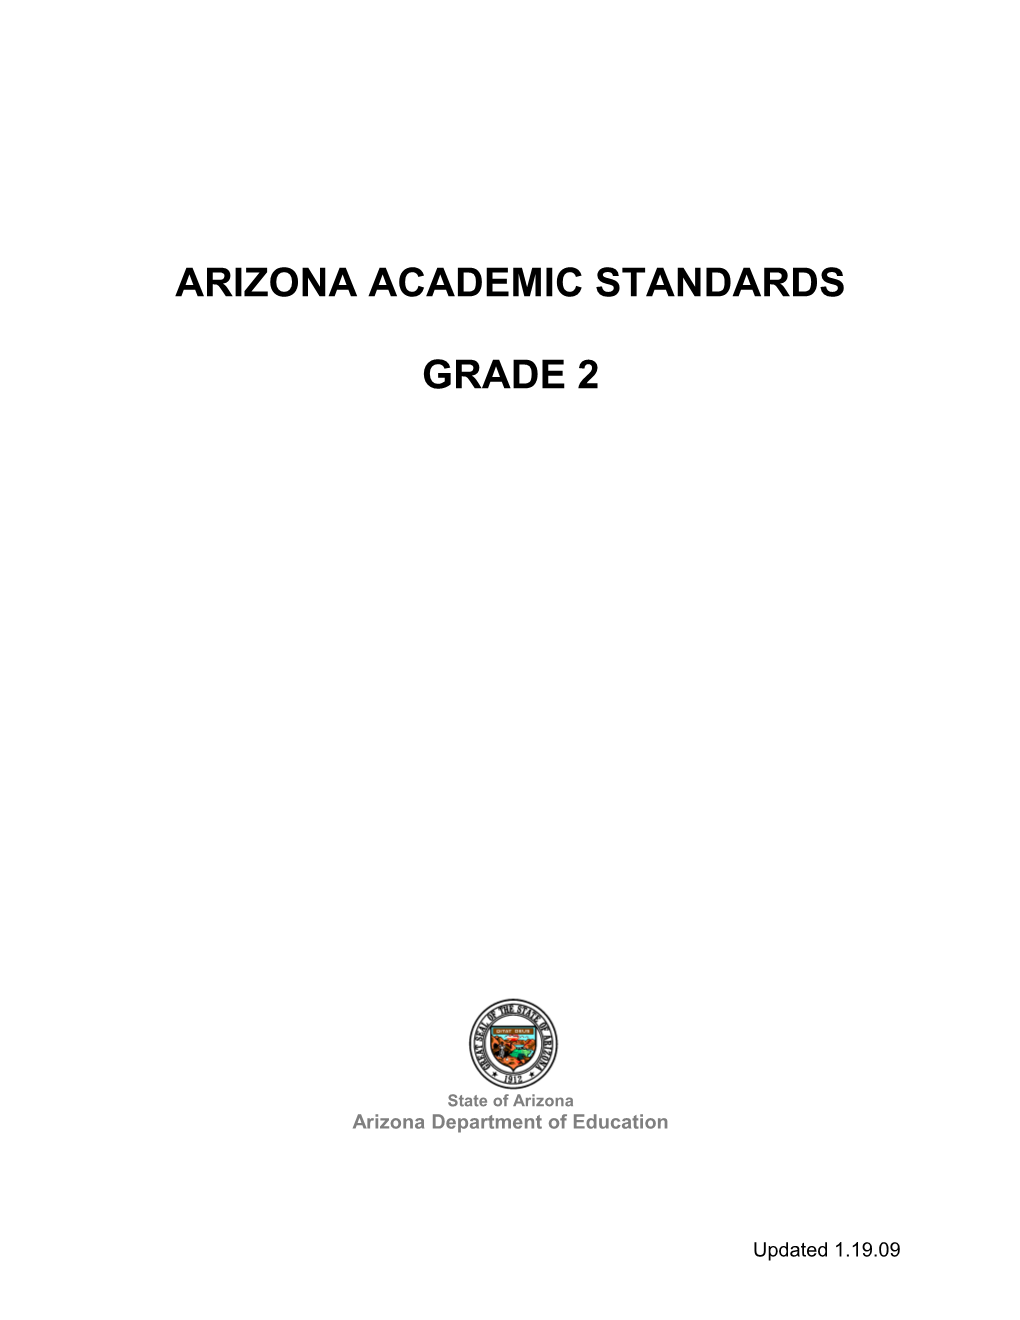 Arizona Academic Standards